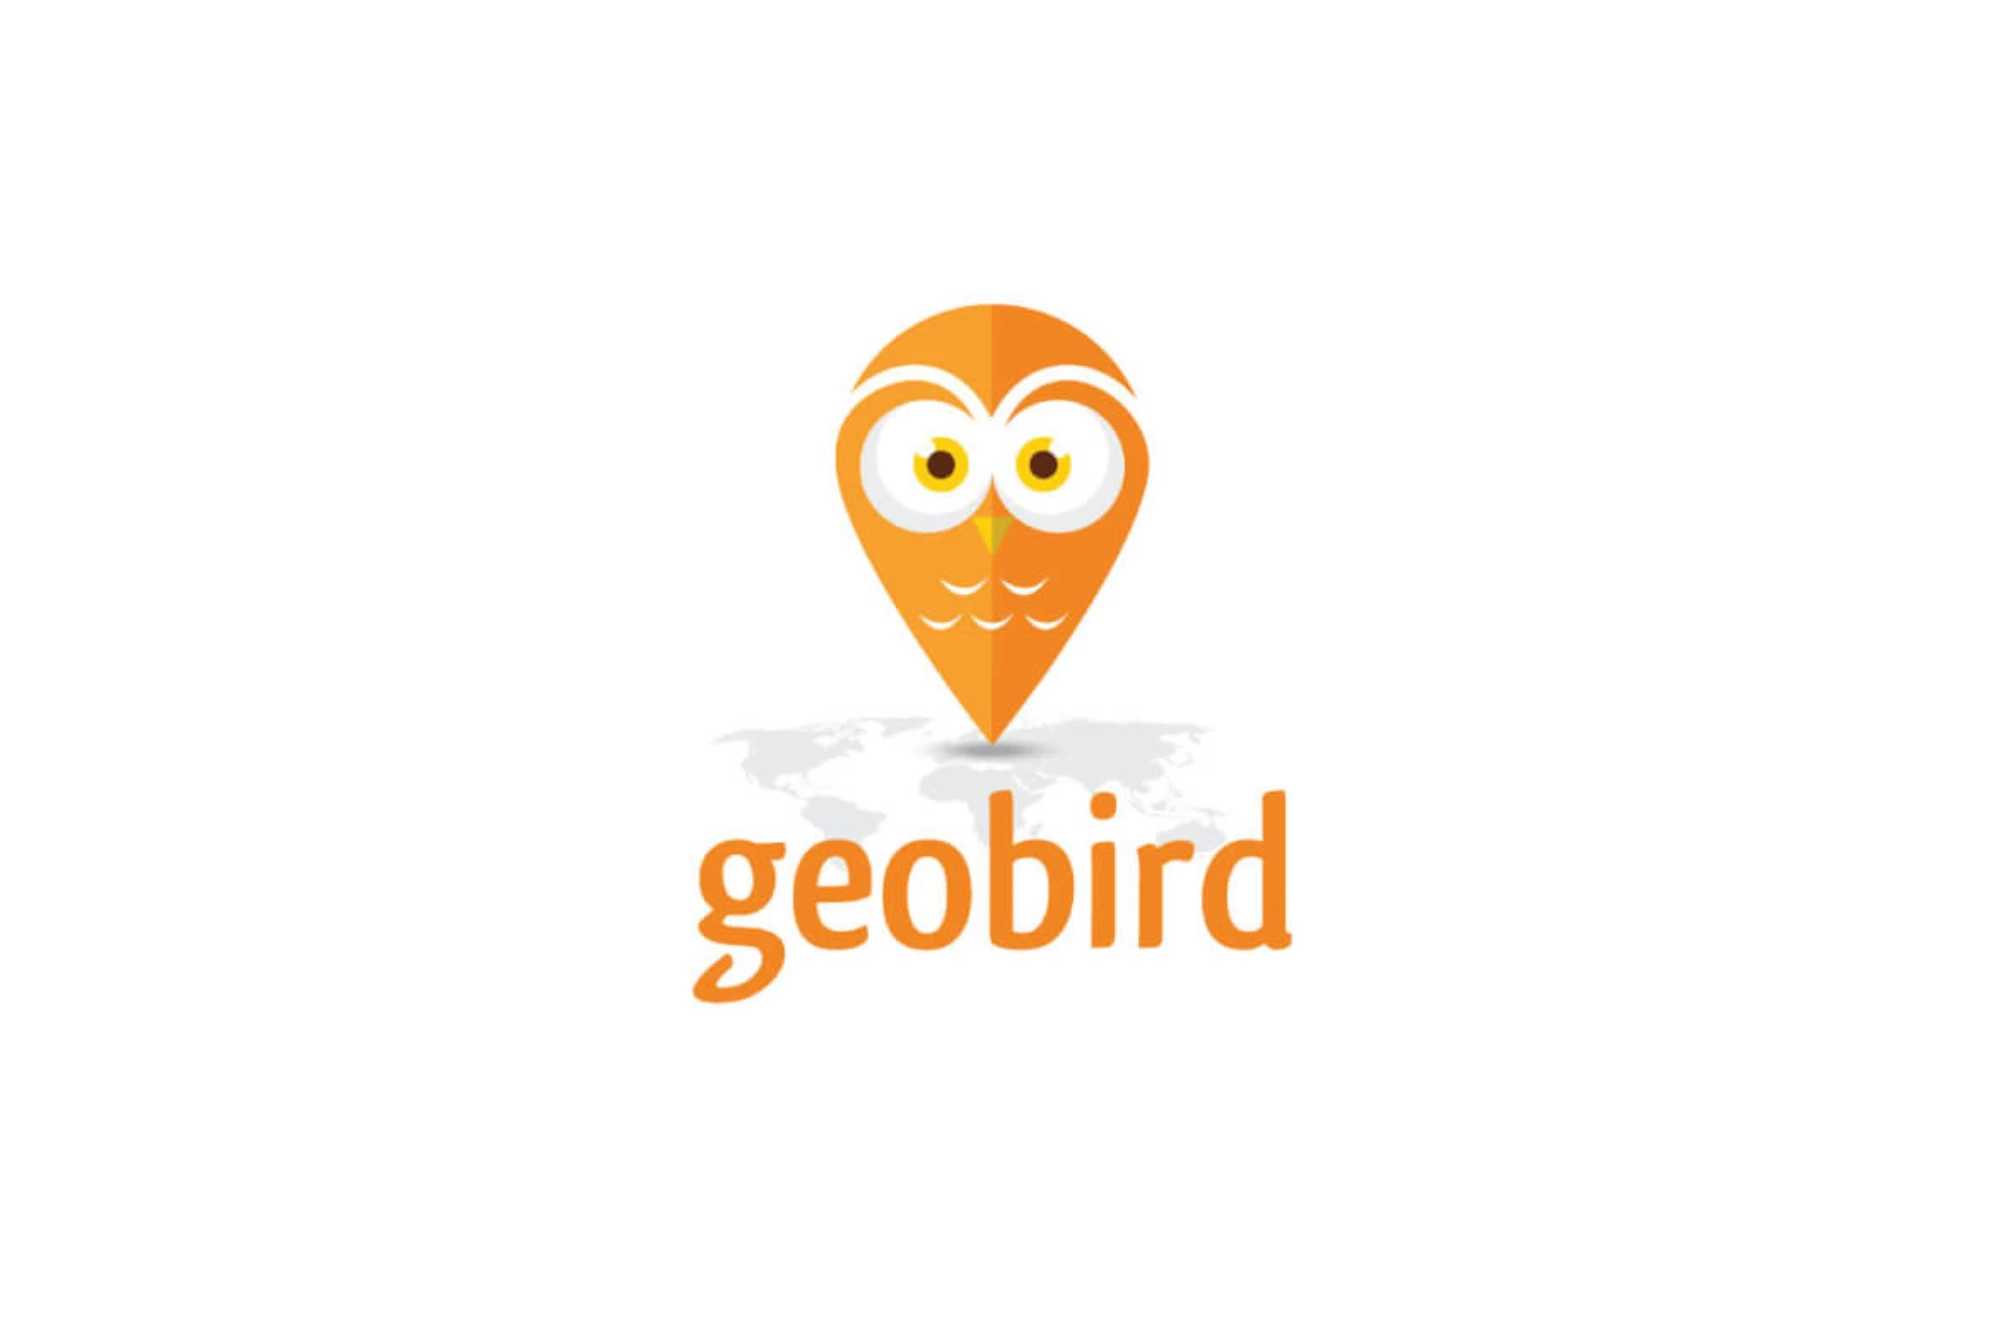 Geobird